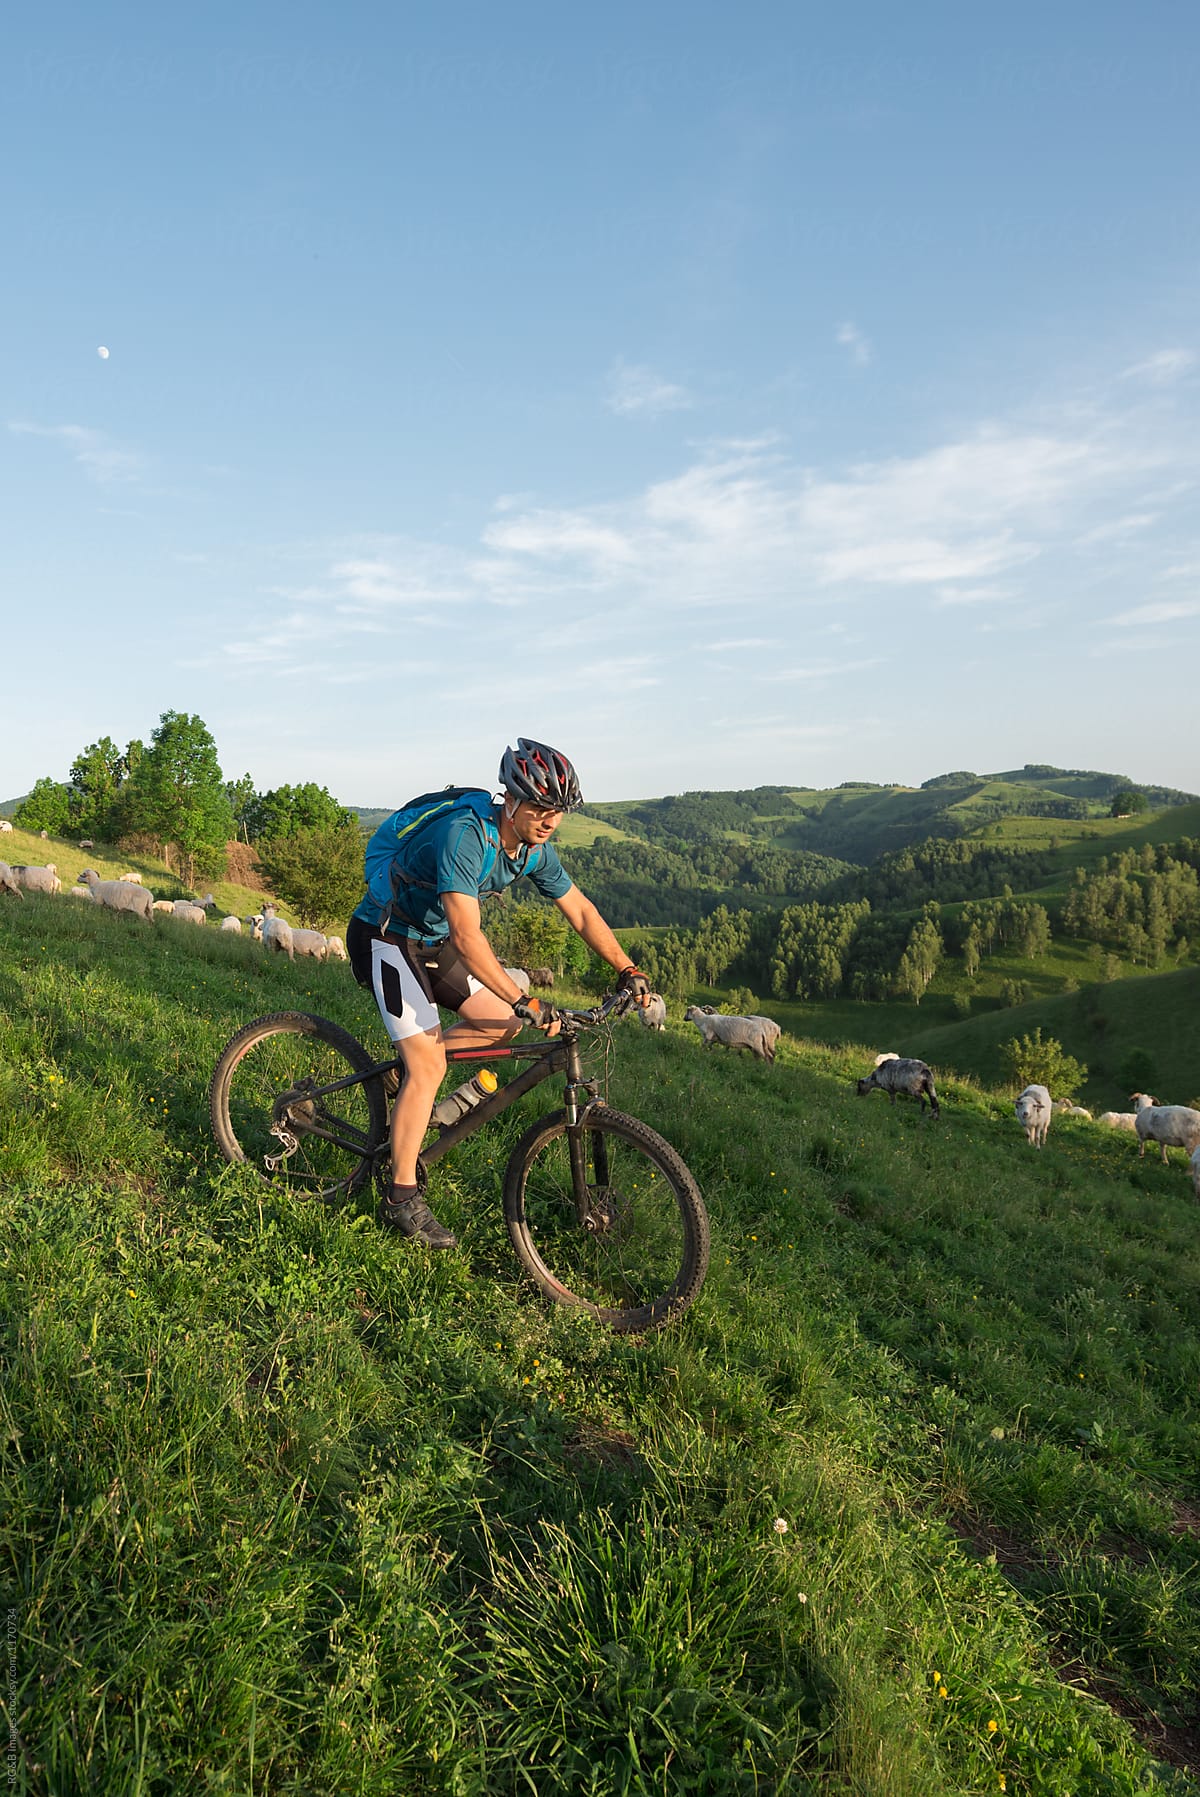 Sportive man riding his bike downhill on a mountain meadow